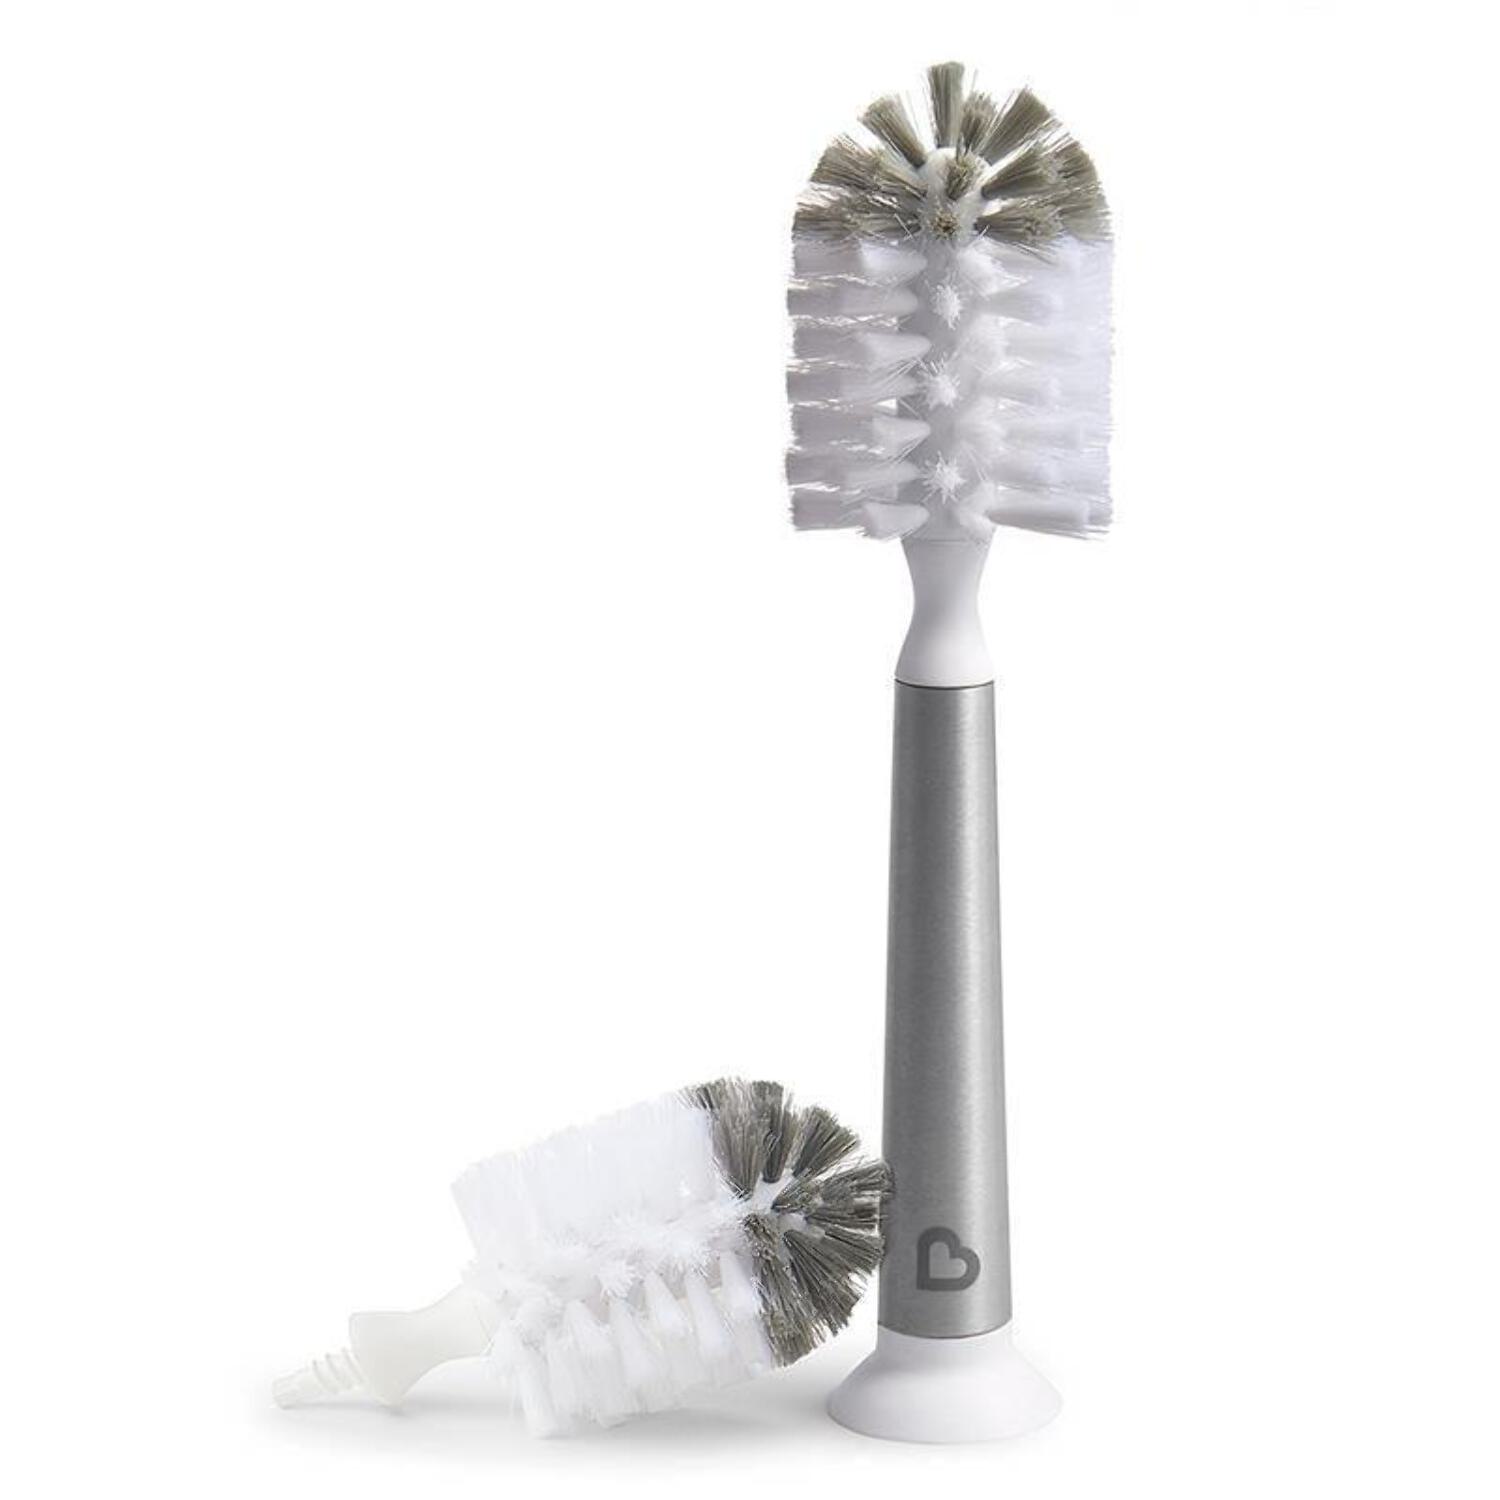 Munchkin® Shine™ Stainless Steel Bottle Brush and Refill Brush Head, Gray - image 4 of 9